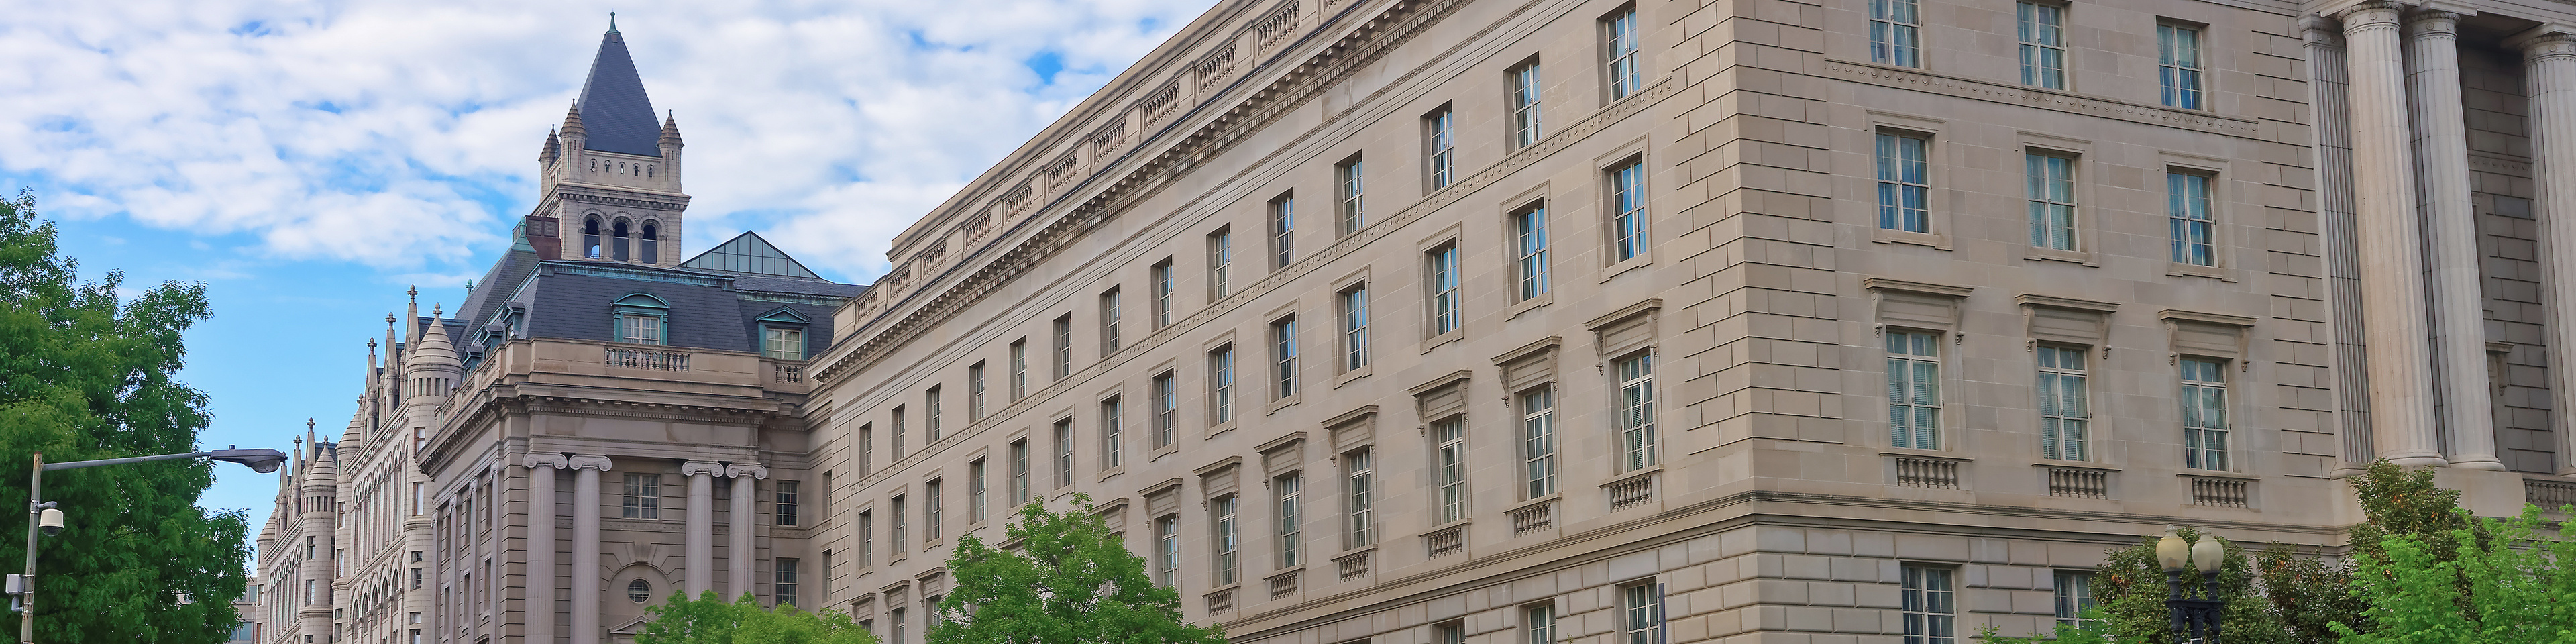 Internal Revenue Service building in Washington DC